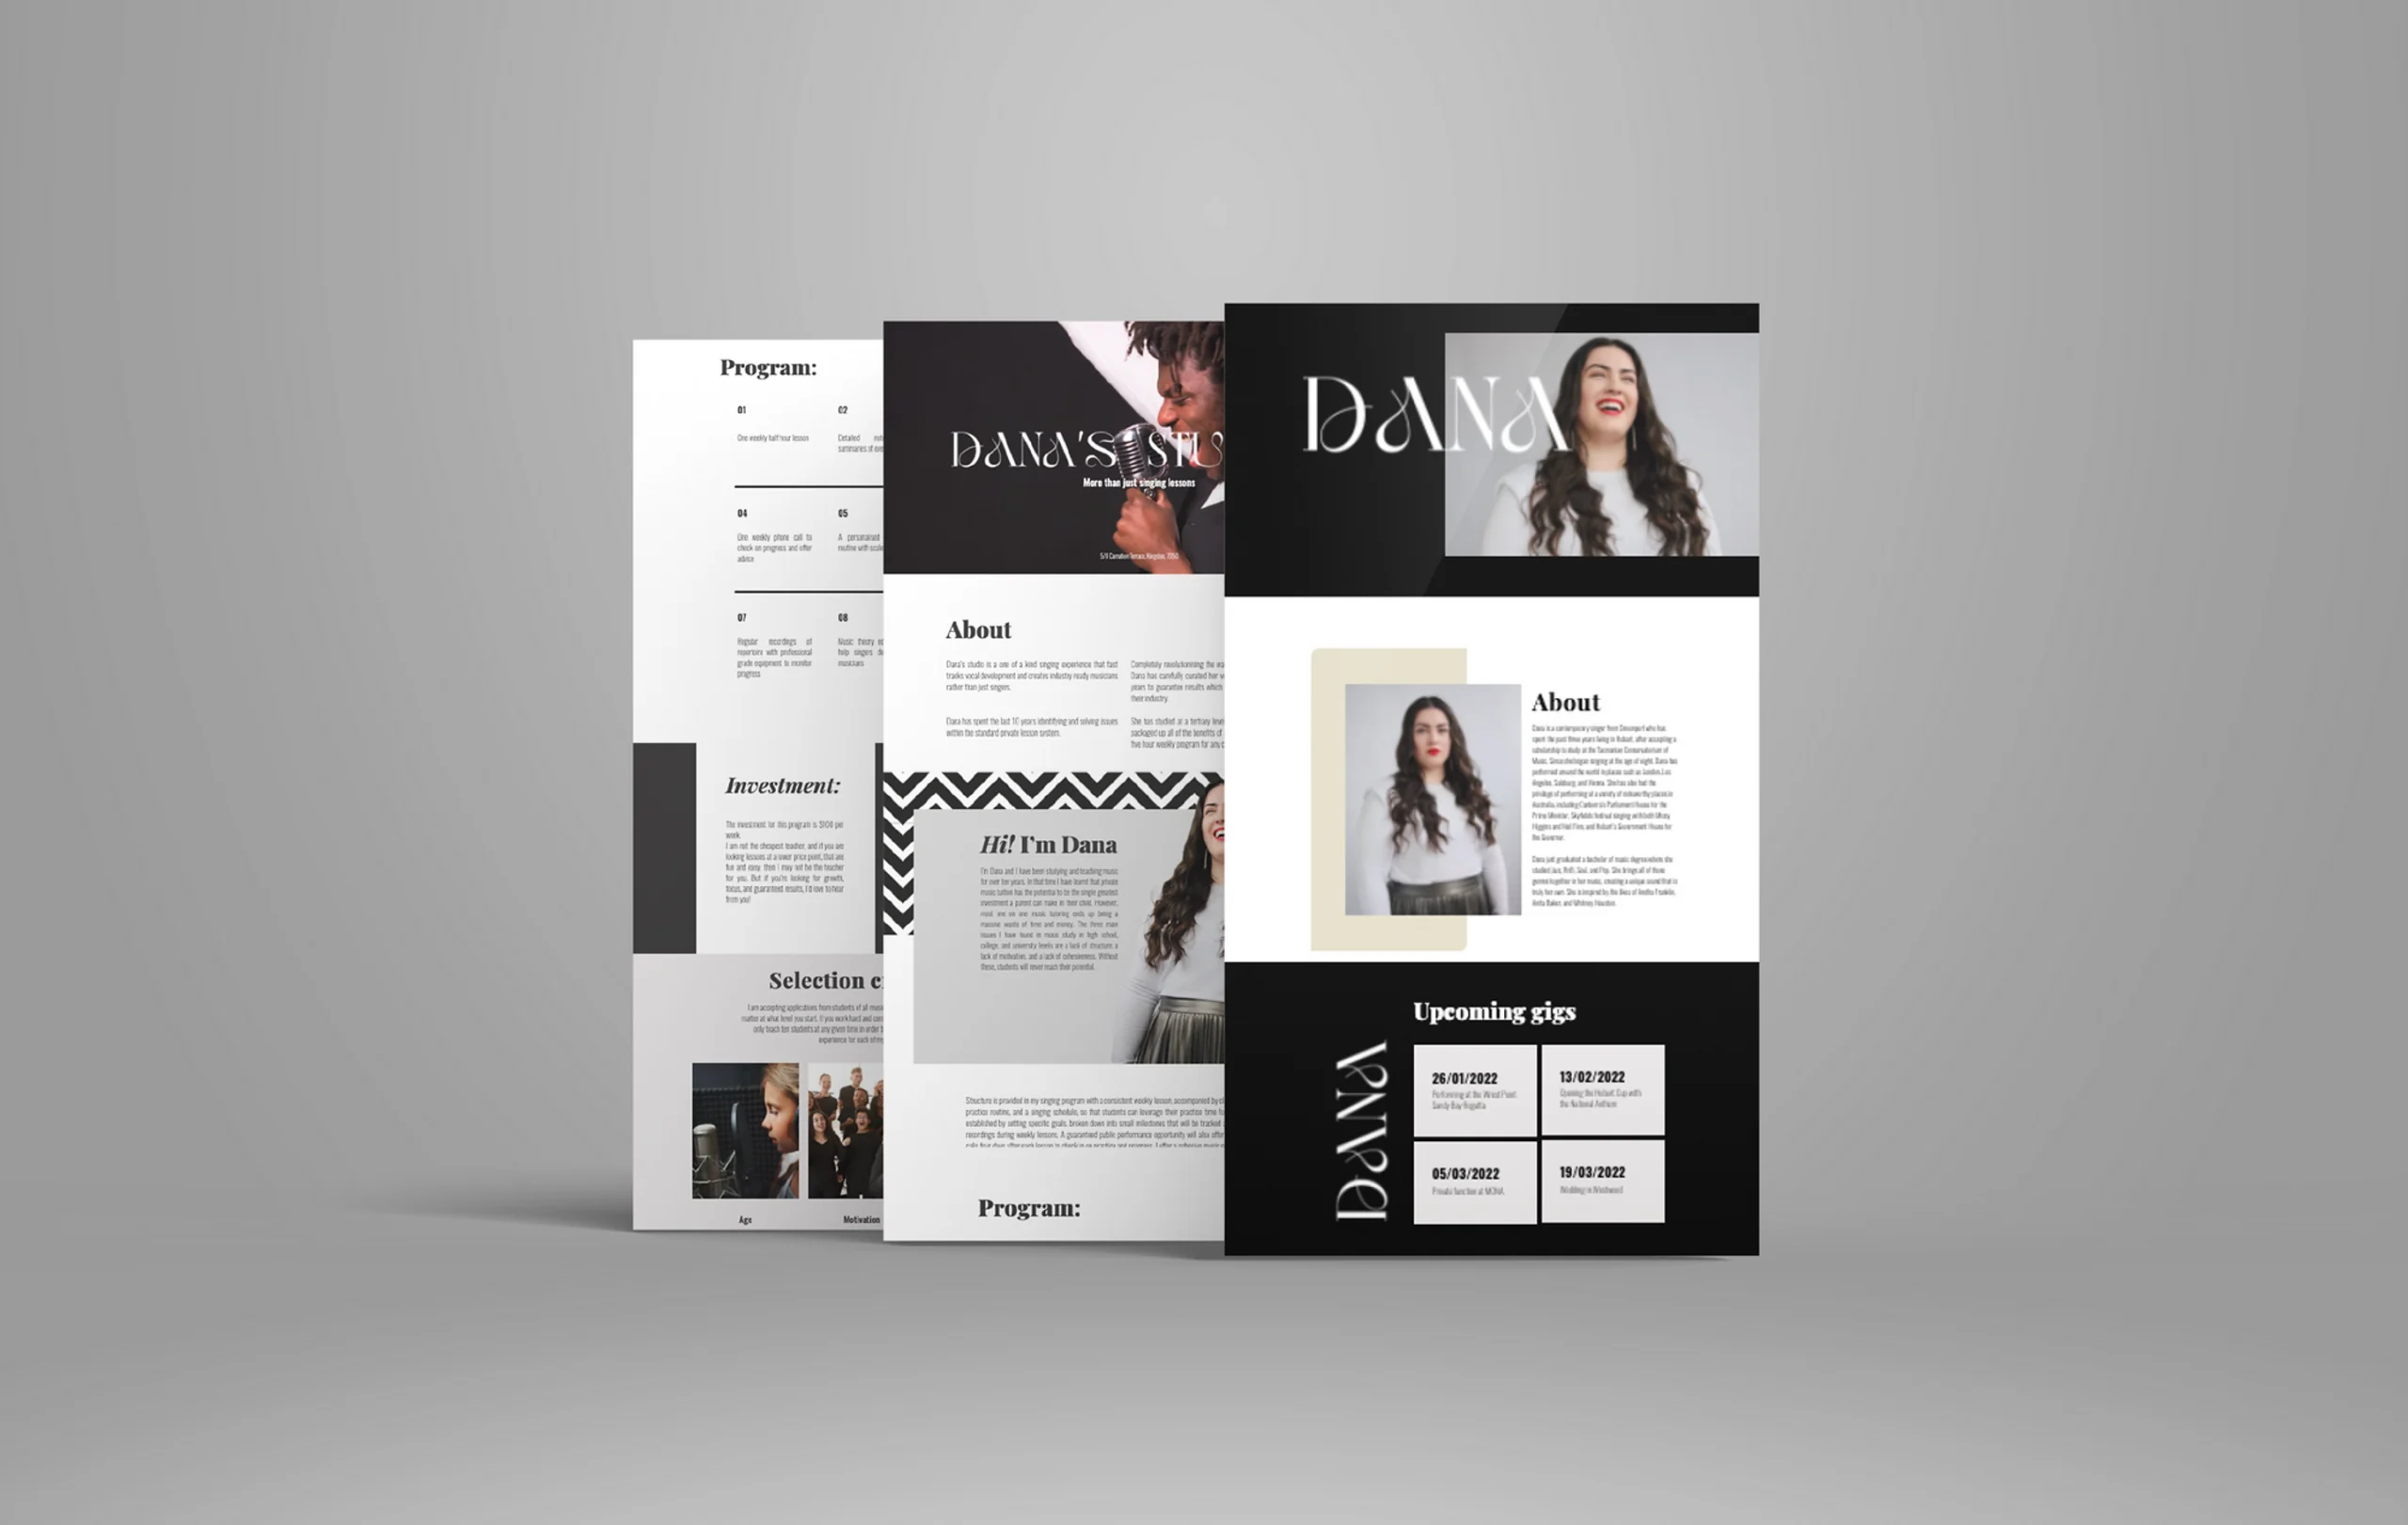 Dana website design with black and white color scheme